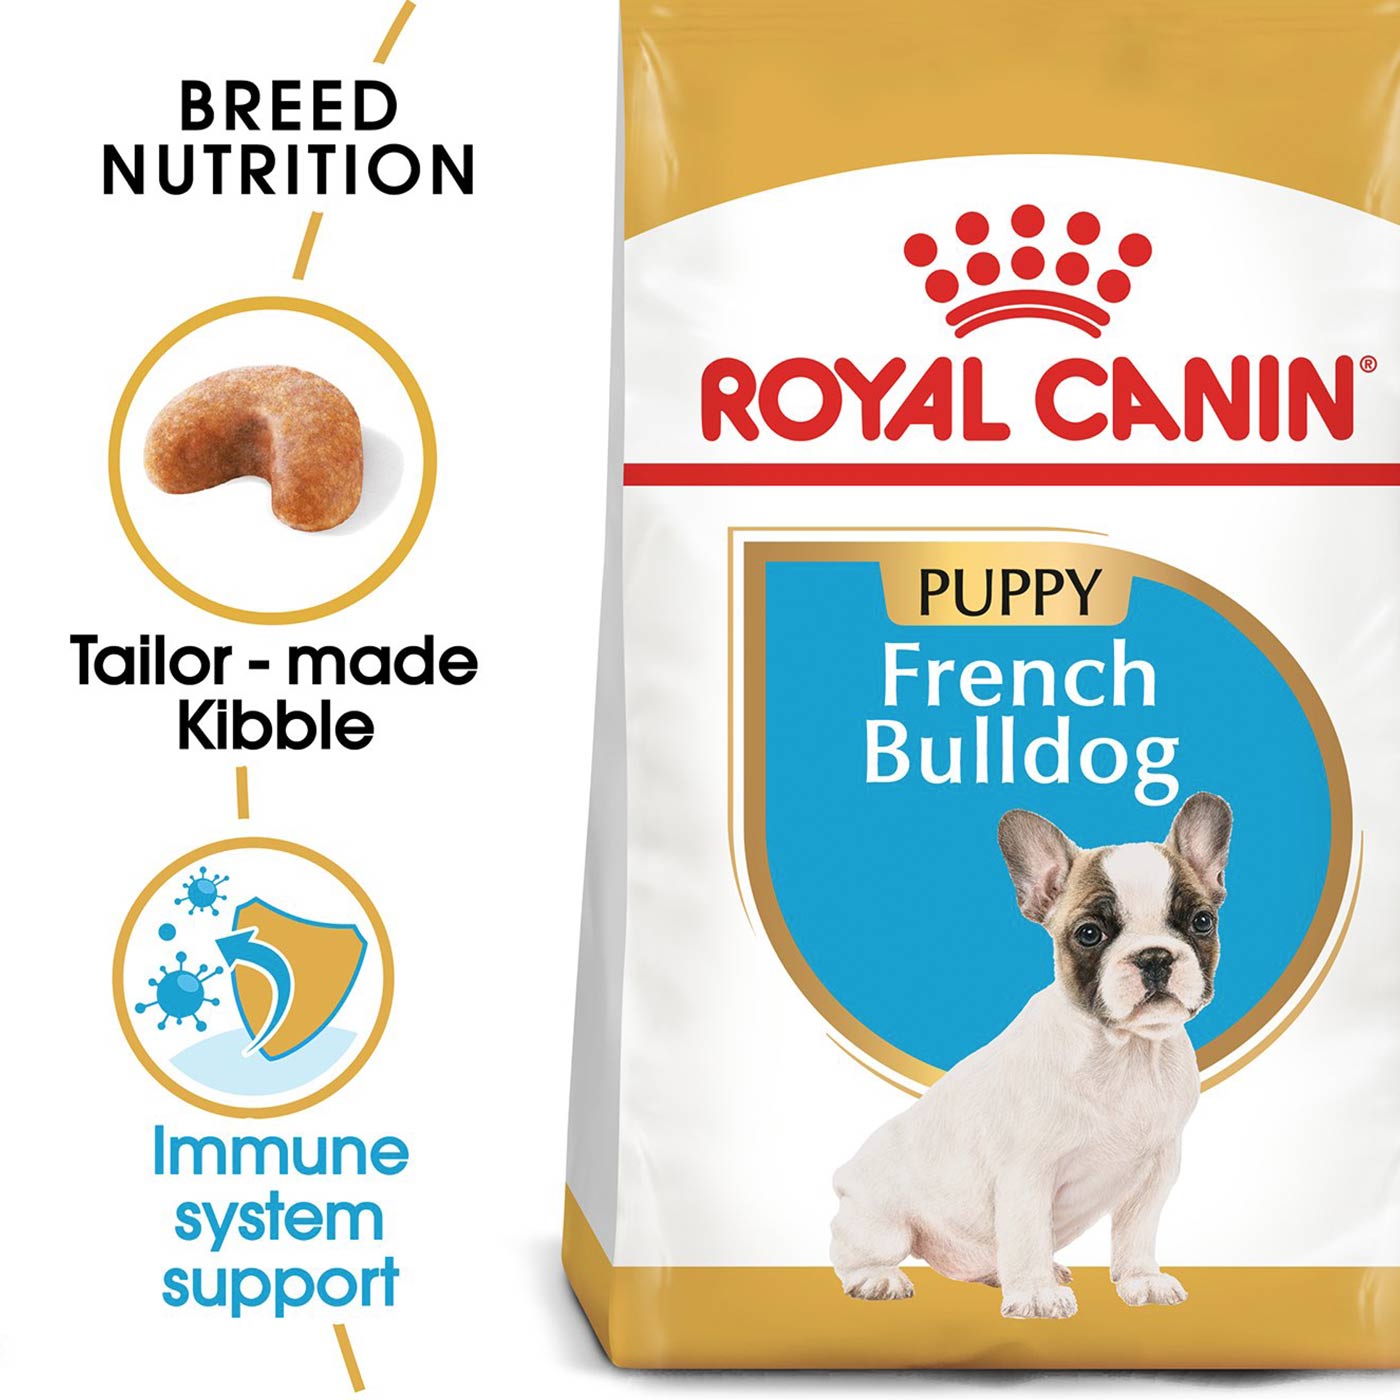 Royal Canin French Bulldog Dry Puppy Food